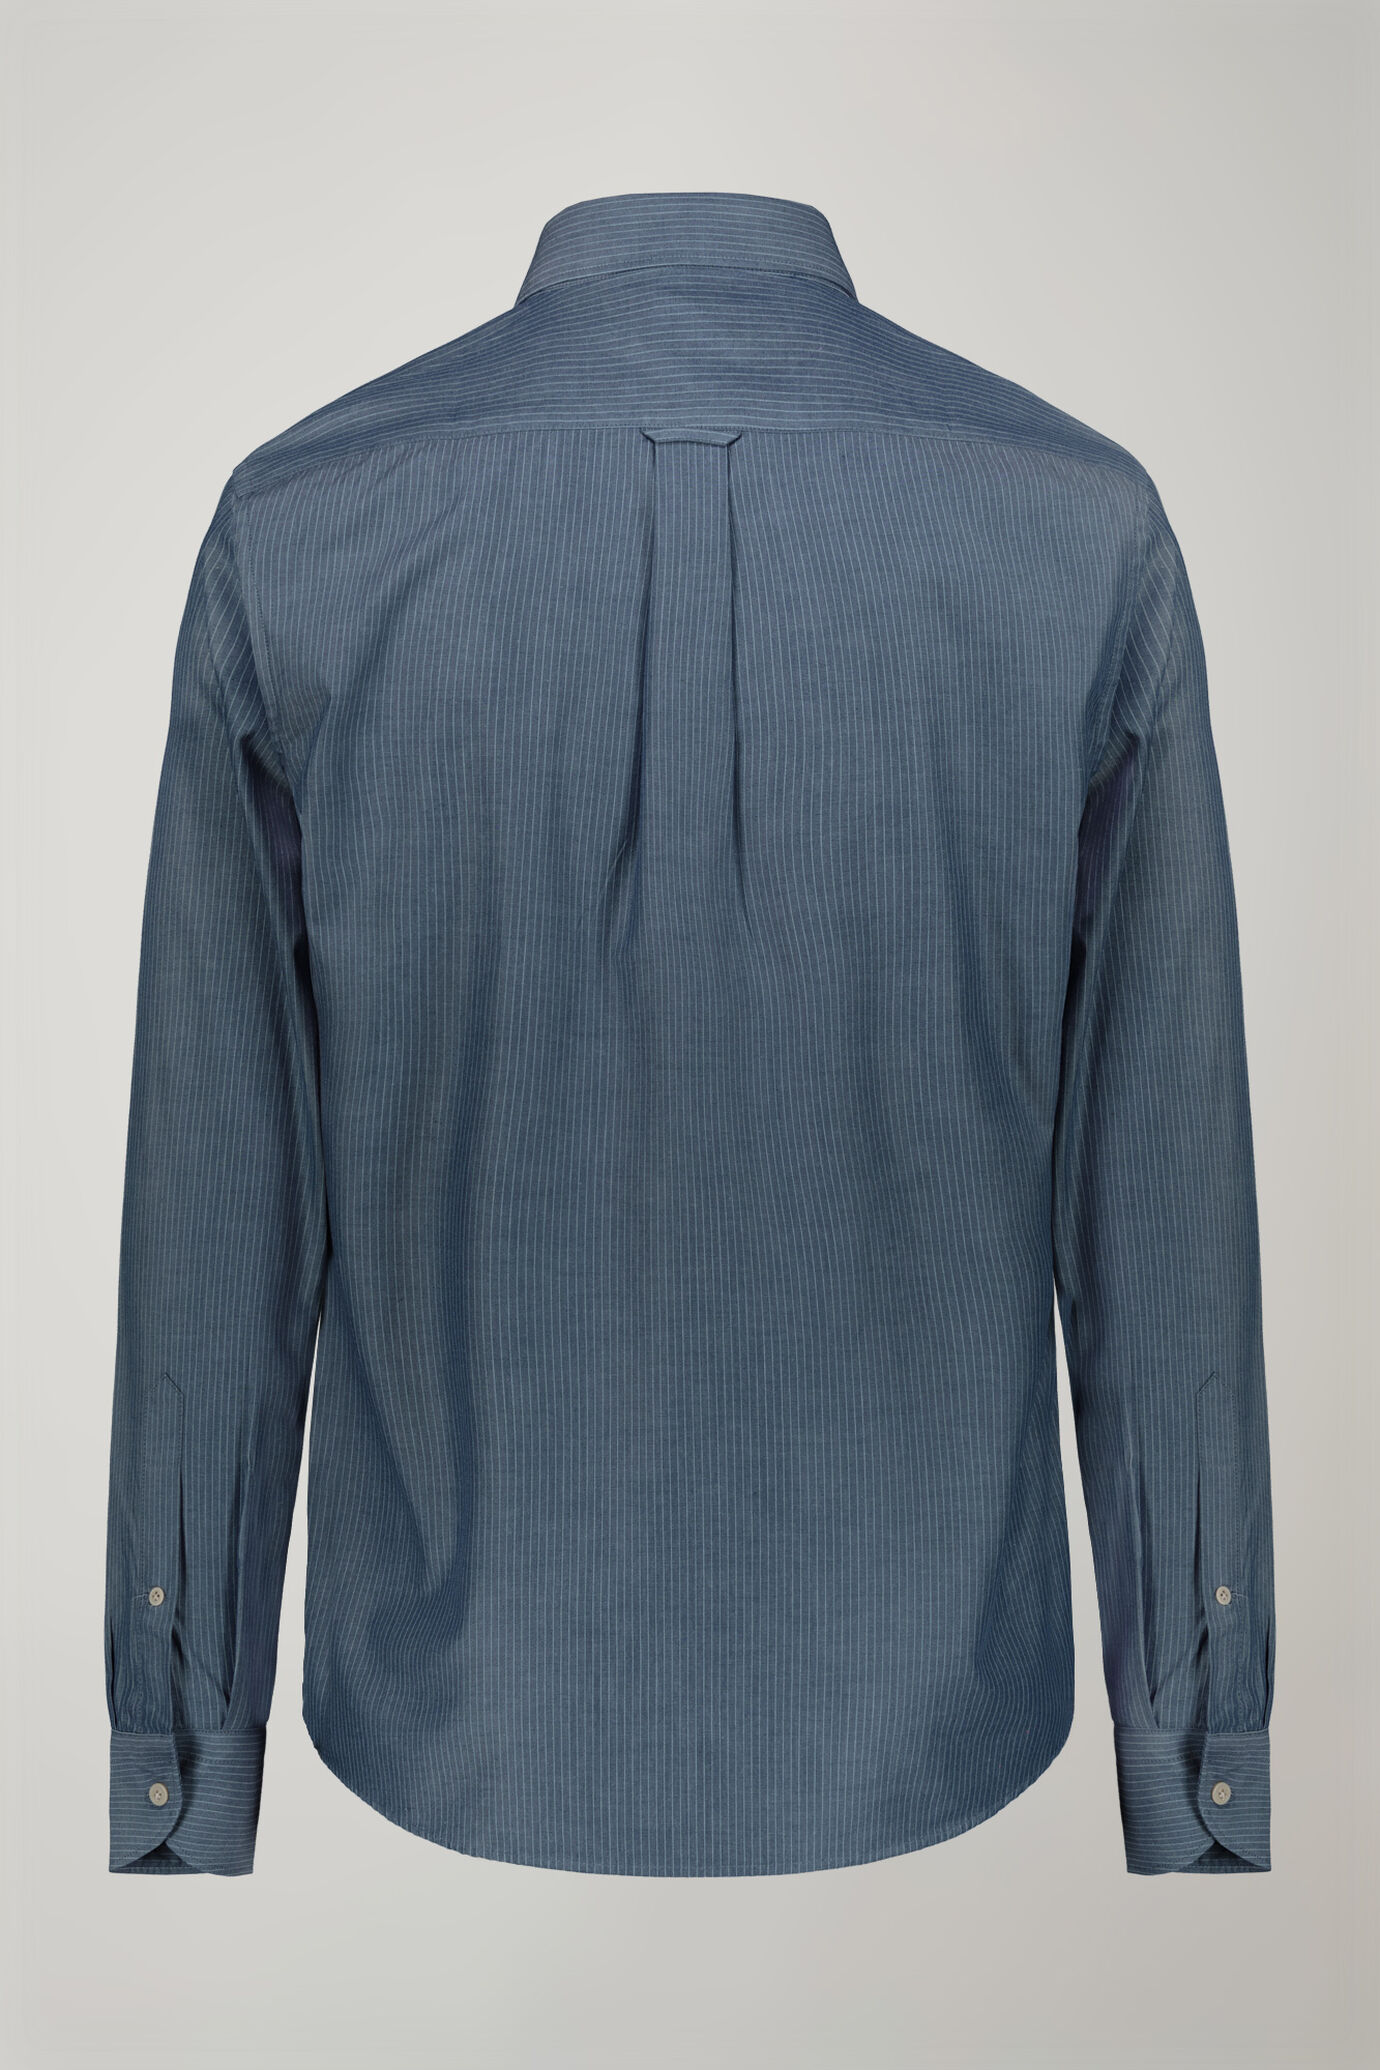 Camicia casual uomo collo classico 100% cotone tessuto gessato in denim comfort fit image number 6